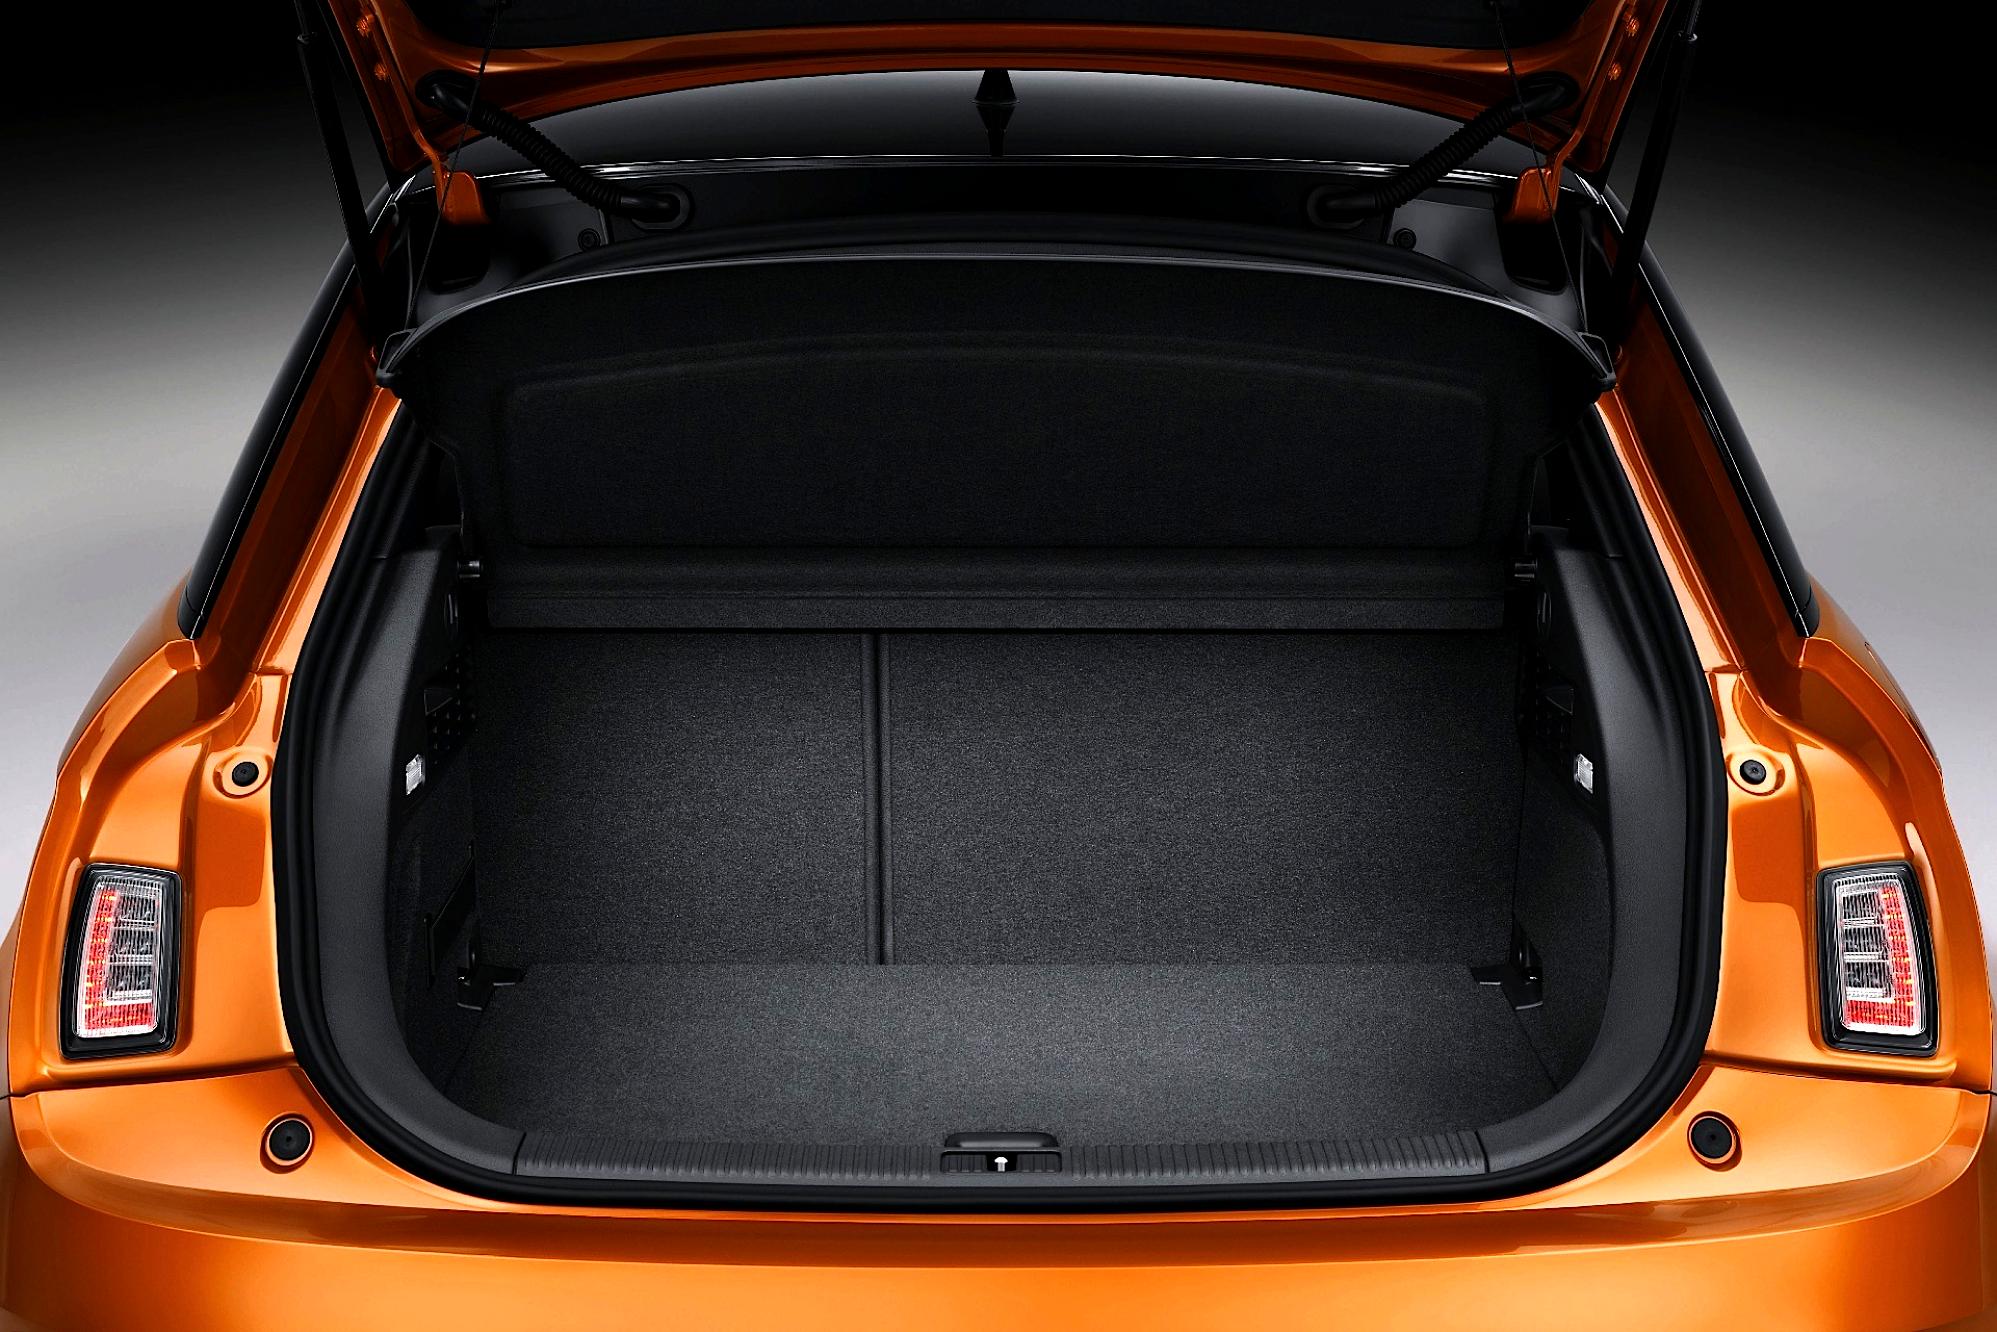 Audi A1 Sportback 5 Doors 2012 #111